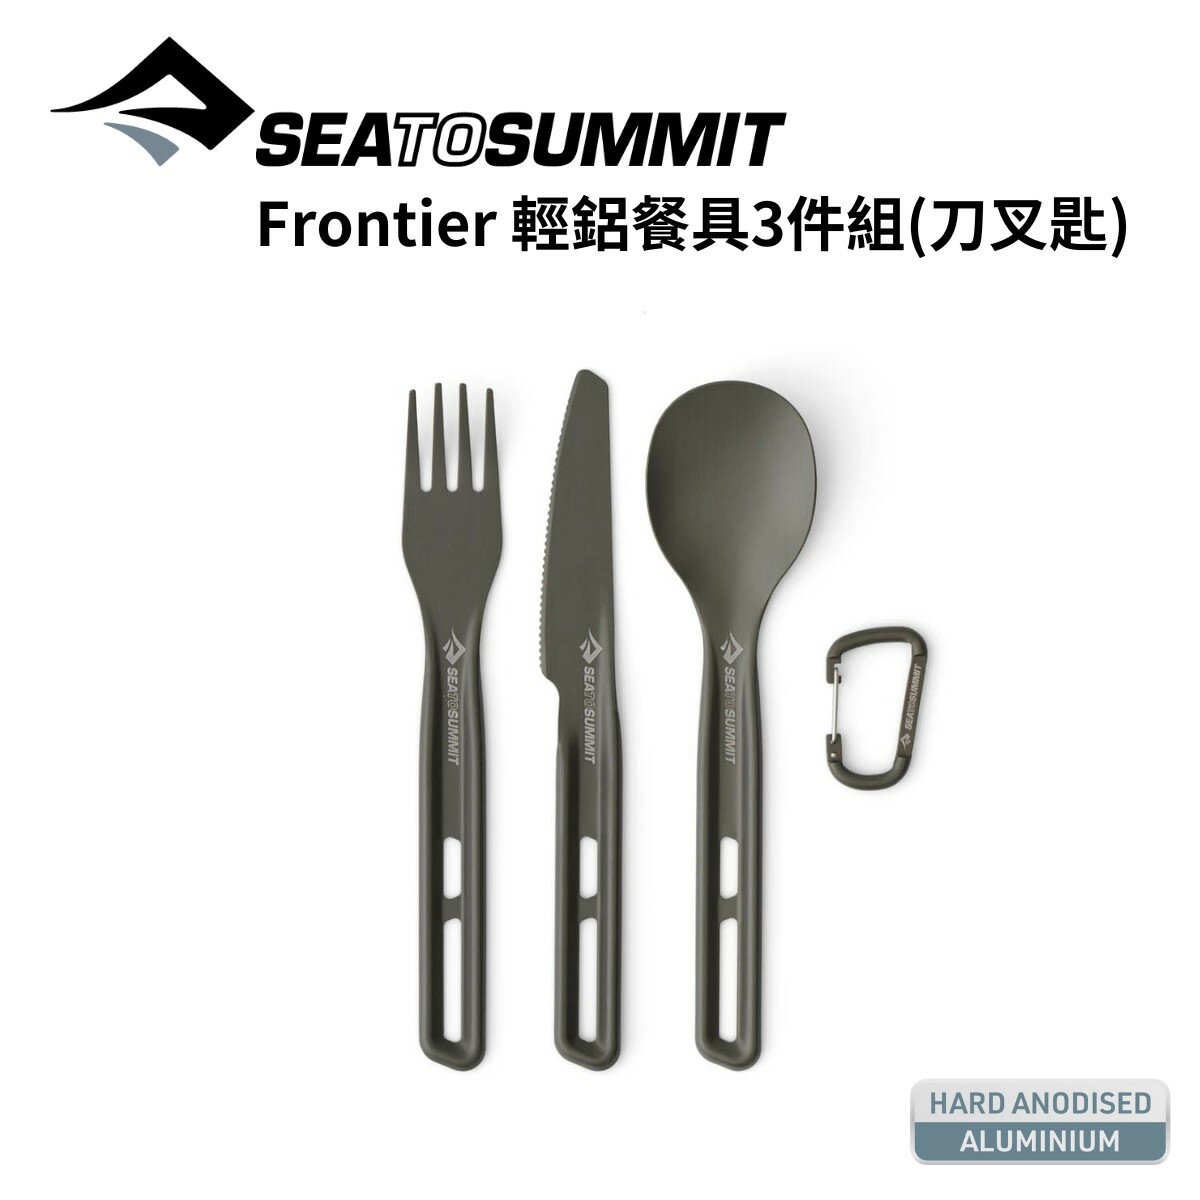 【Sea to Summit】Frontier 輕鋁餐具3件組(刀叉匙) Frontier Ultralight Cutlery Set